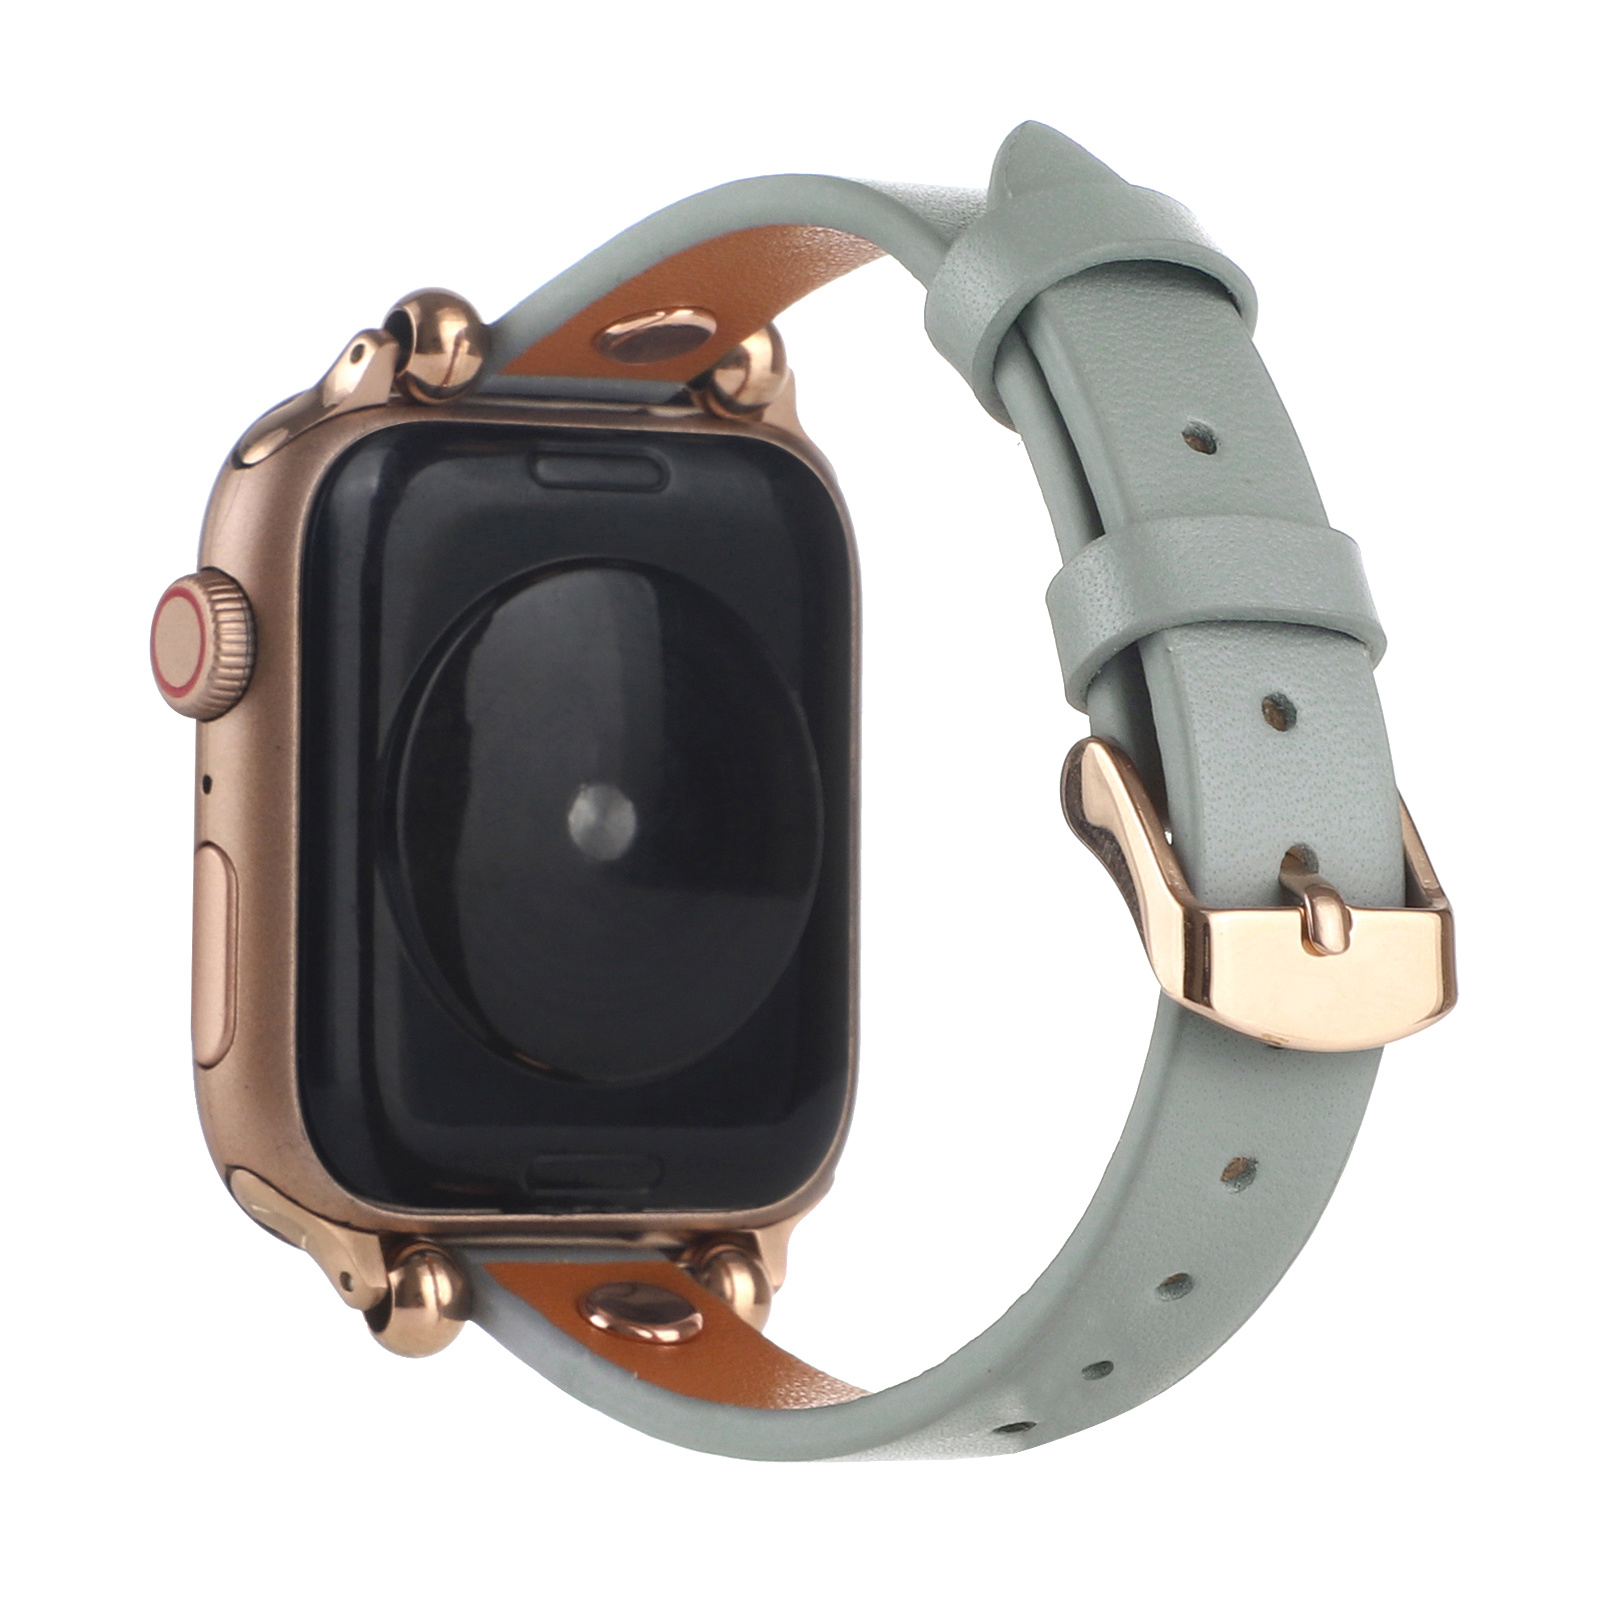 Apple Watch schlankes Lederarmband - blau